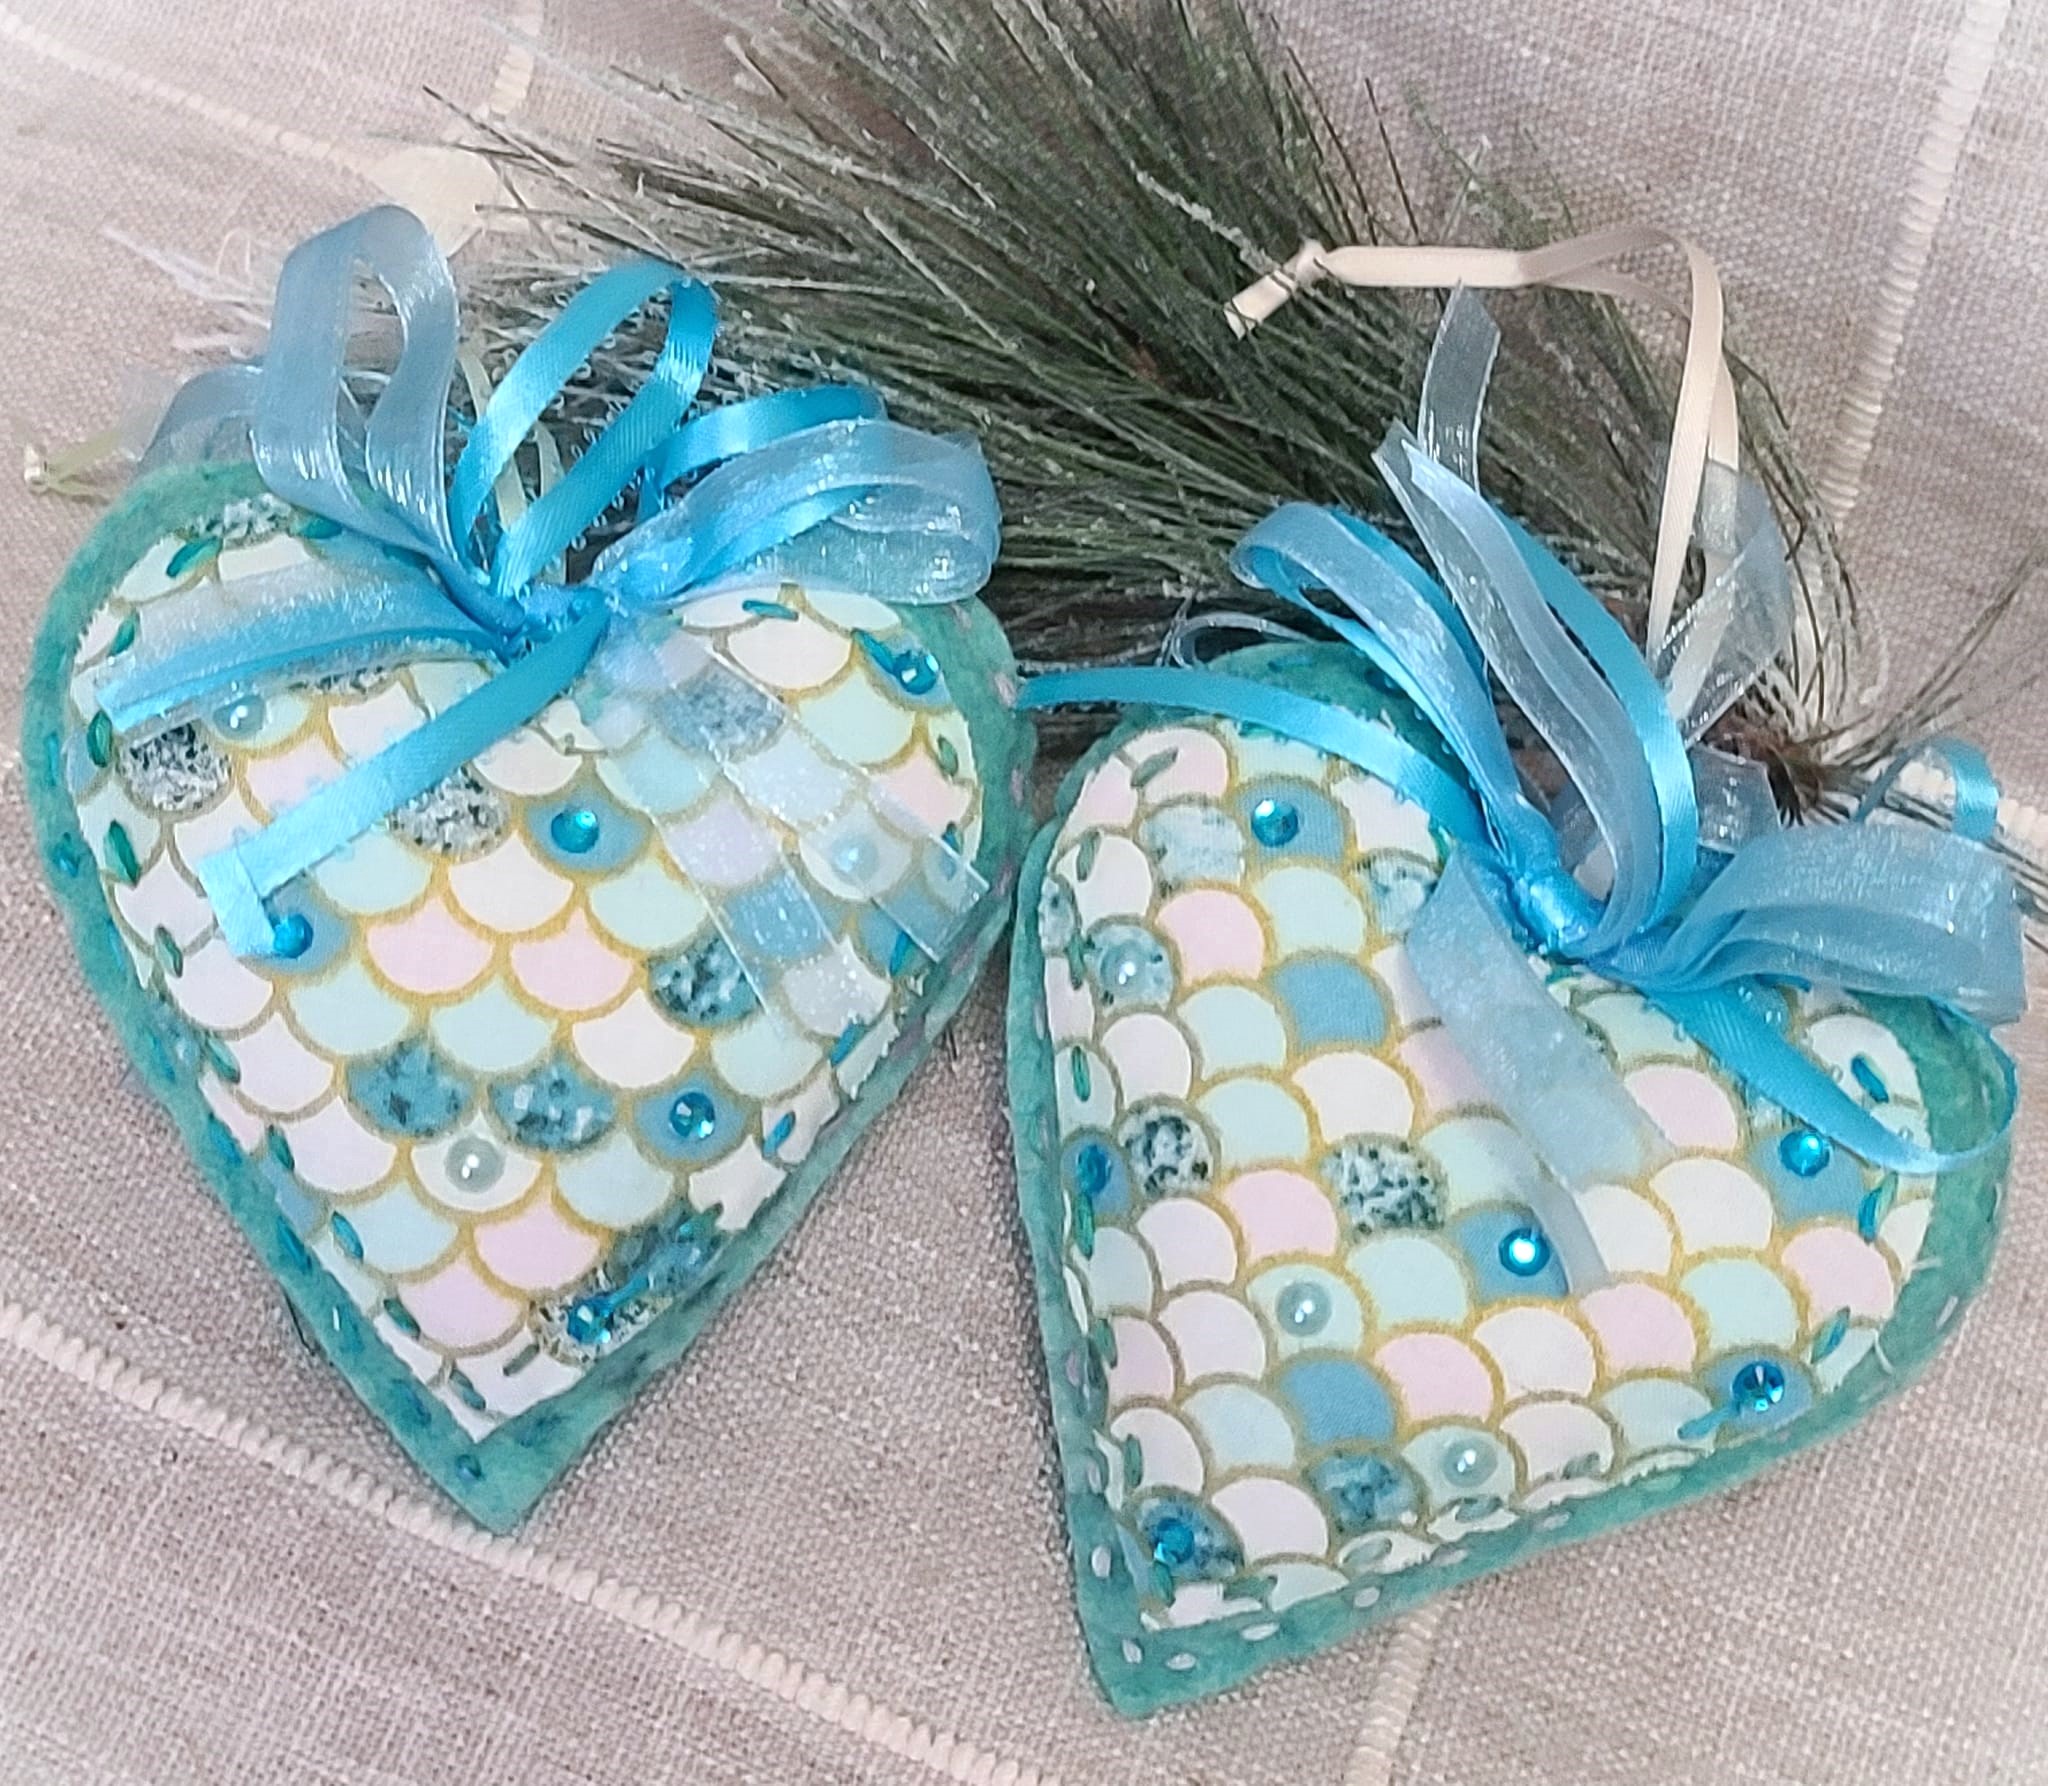 Felt and fabric mermaid turquoise heart ornaments